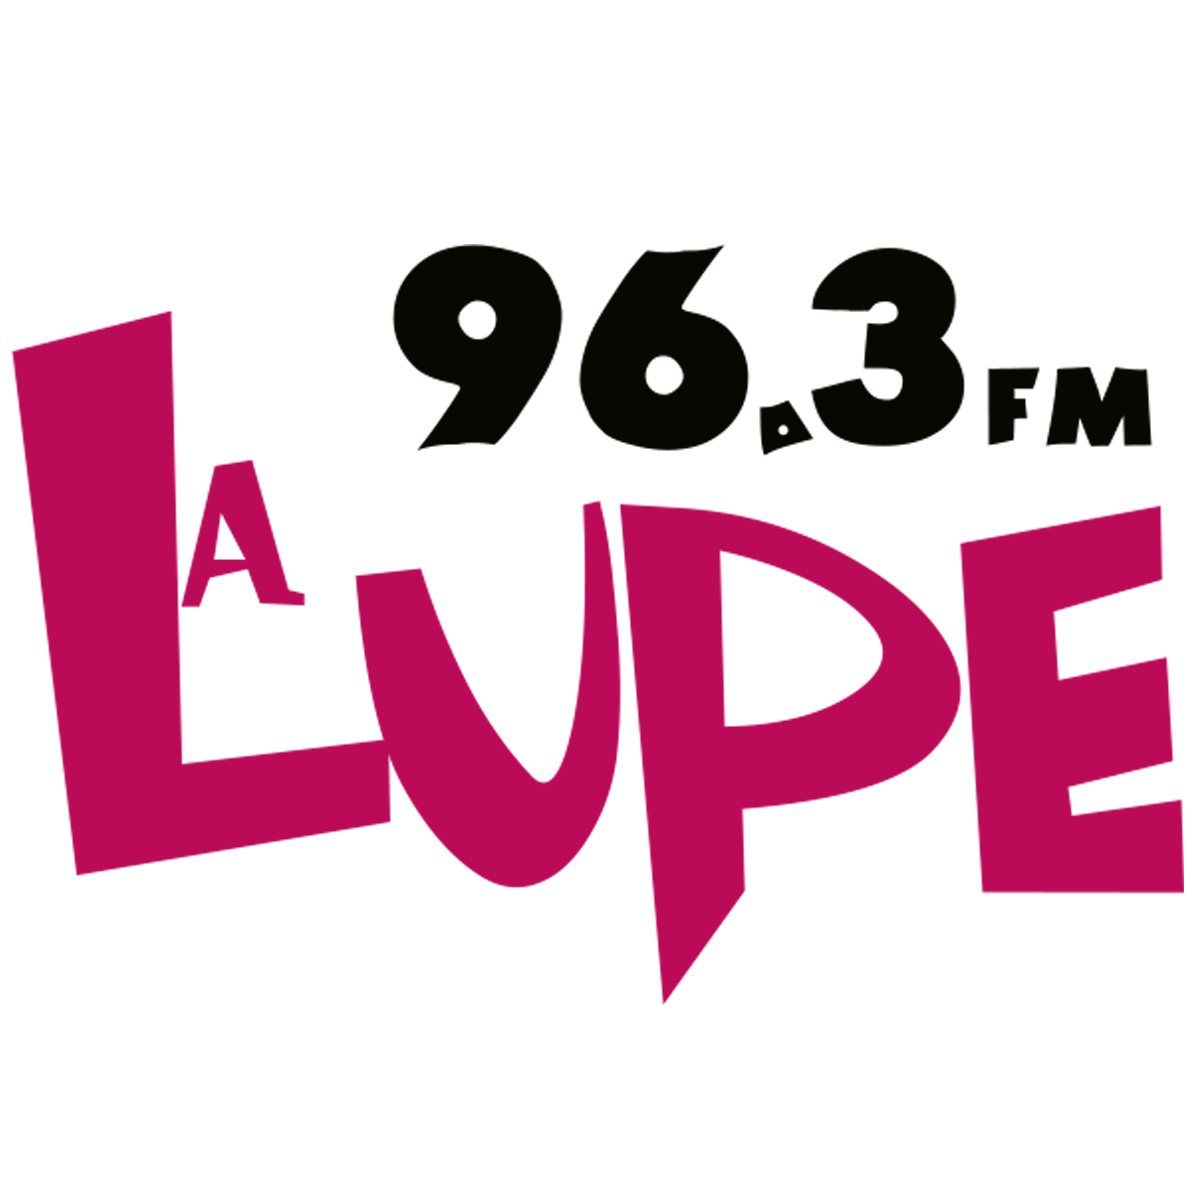 La Lupe (Veracruz) - 96.3 FM - XHPUGC-FM - Multimedios Radio - Ursulo Galván/Cardel, Veracruz